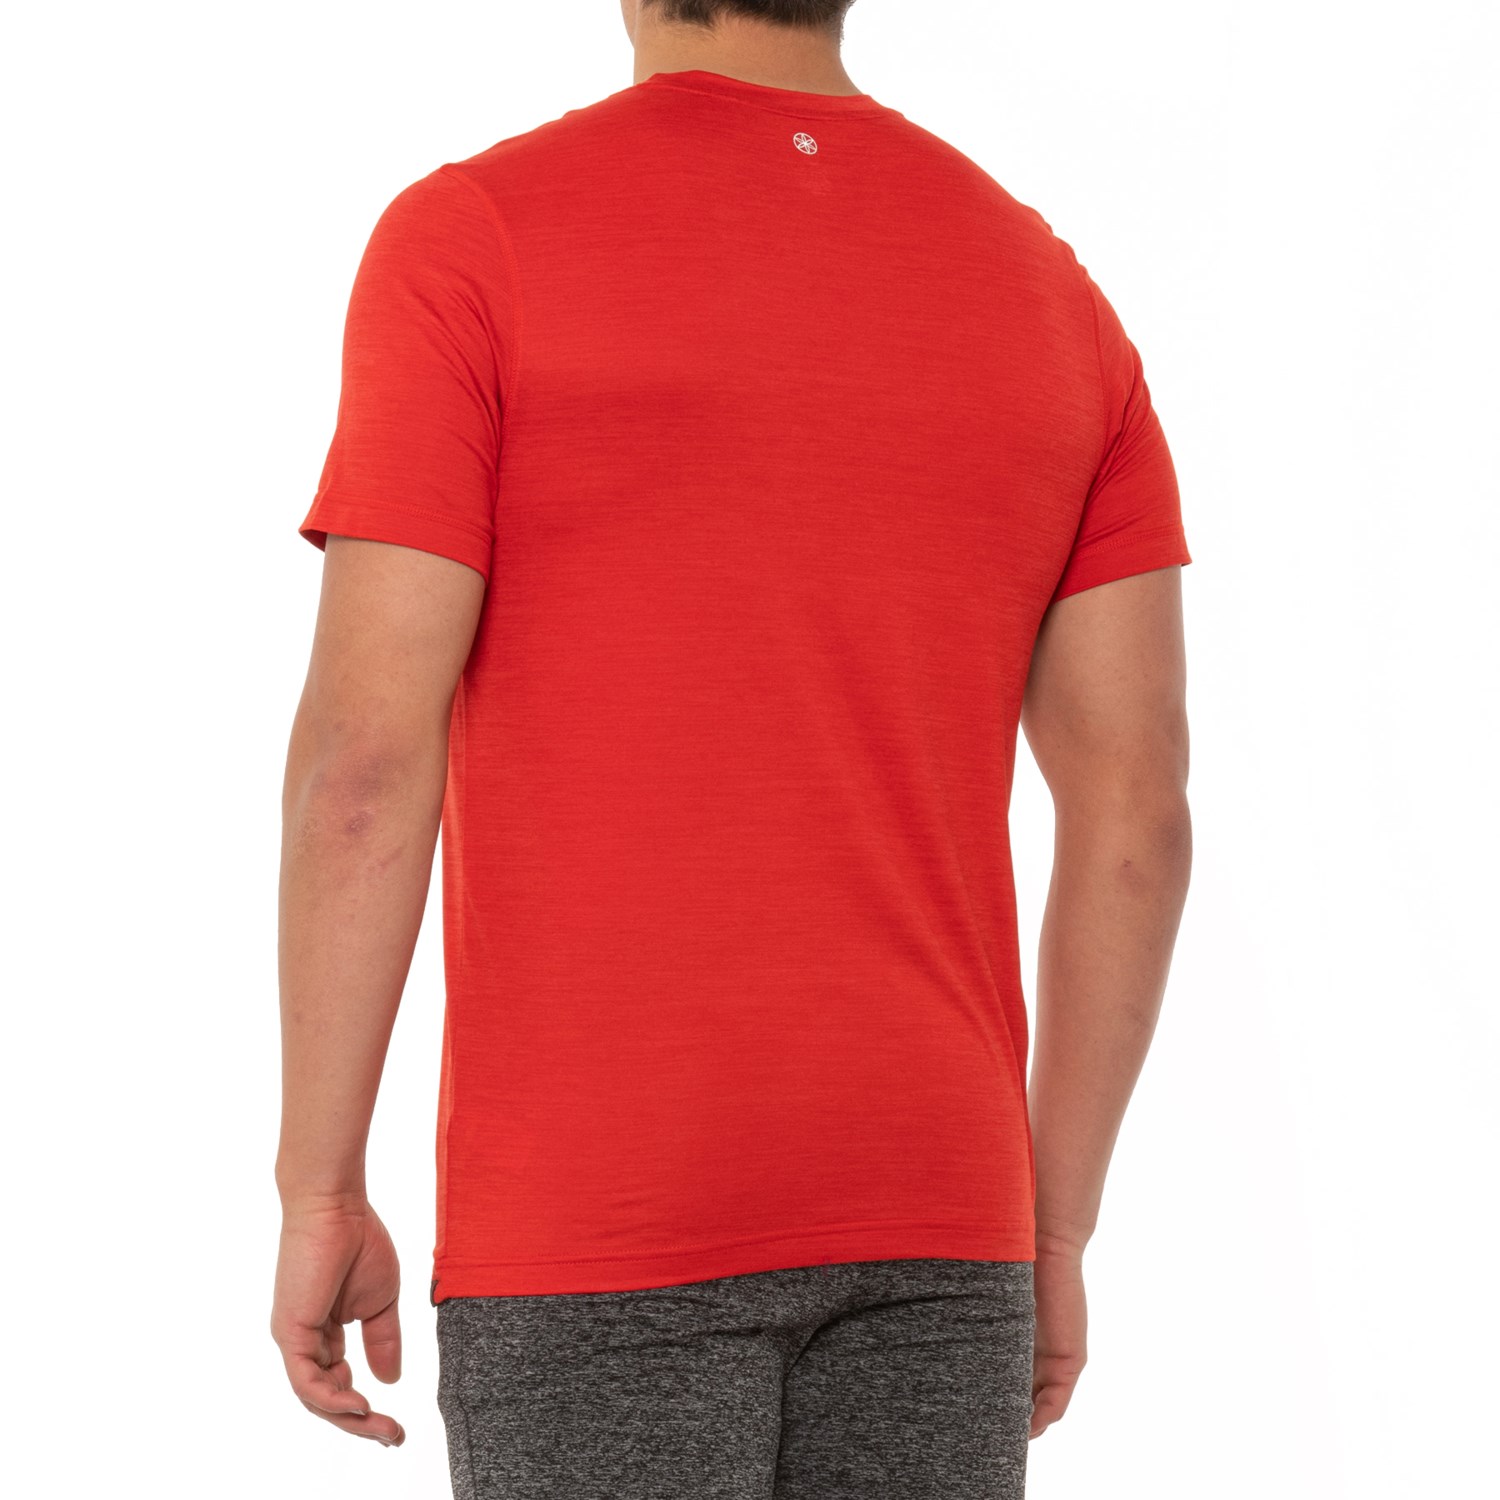 Gaiam Everyday Basic V-Neck T-Shirt (For Men) - Save 57%